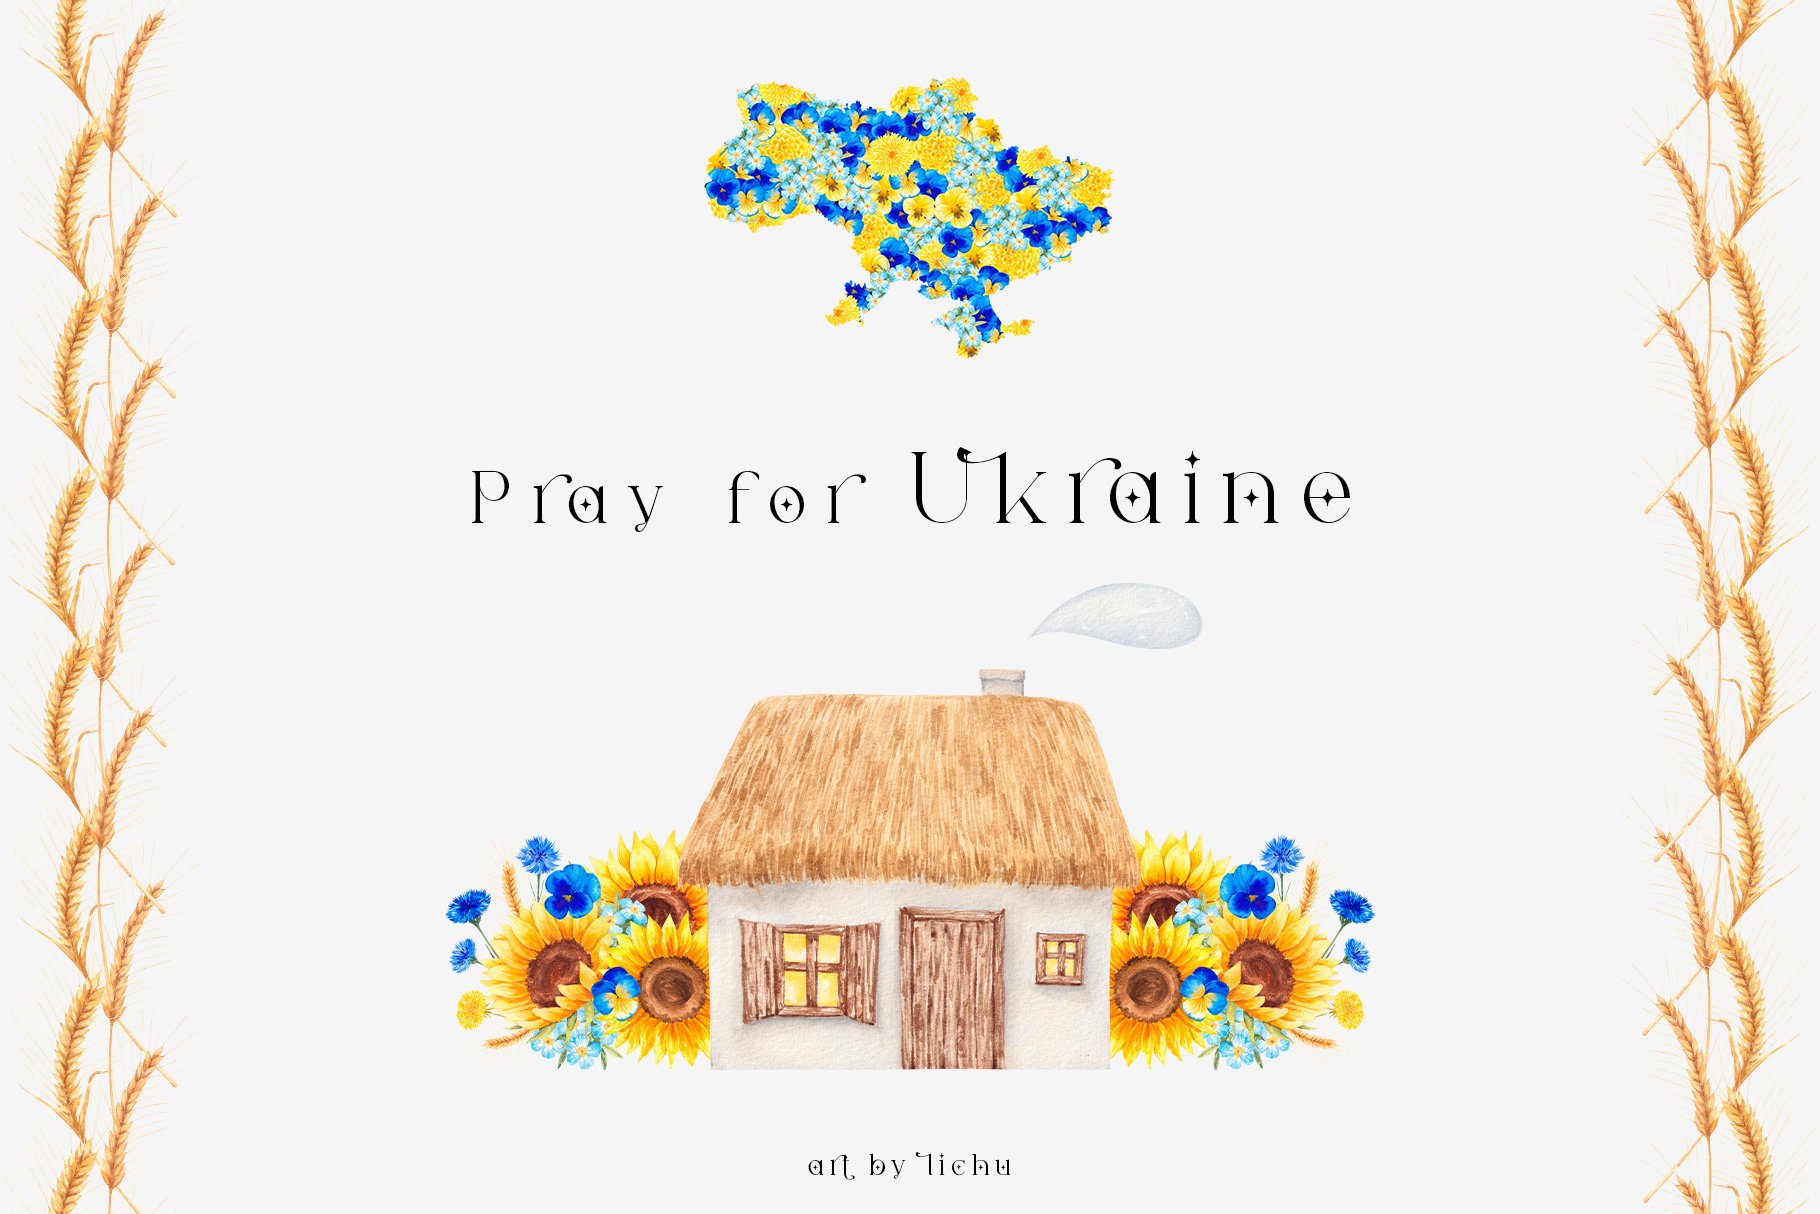 Pray for Ukraine cover image.